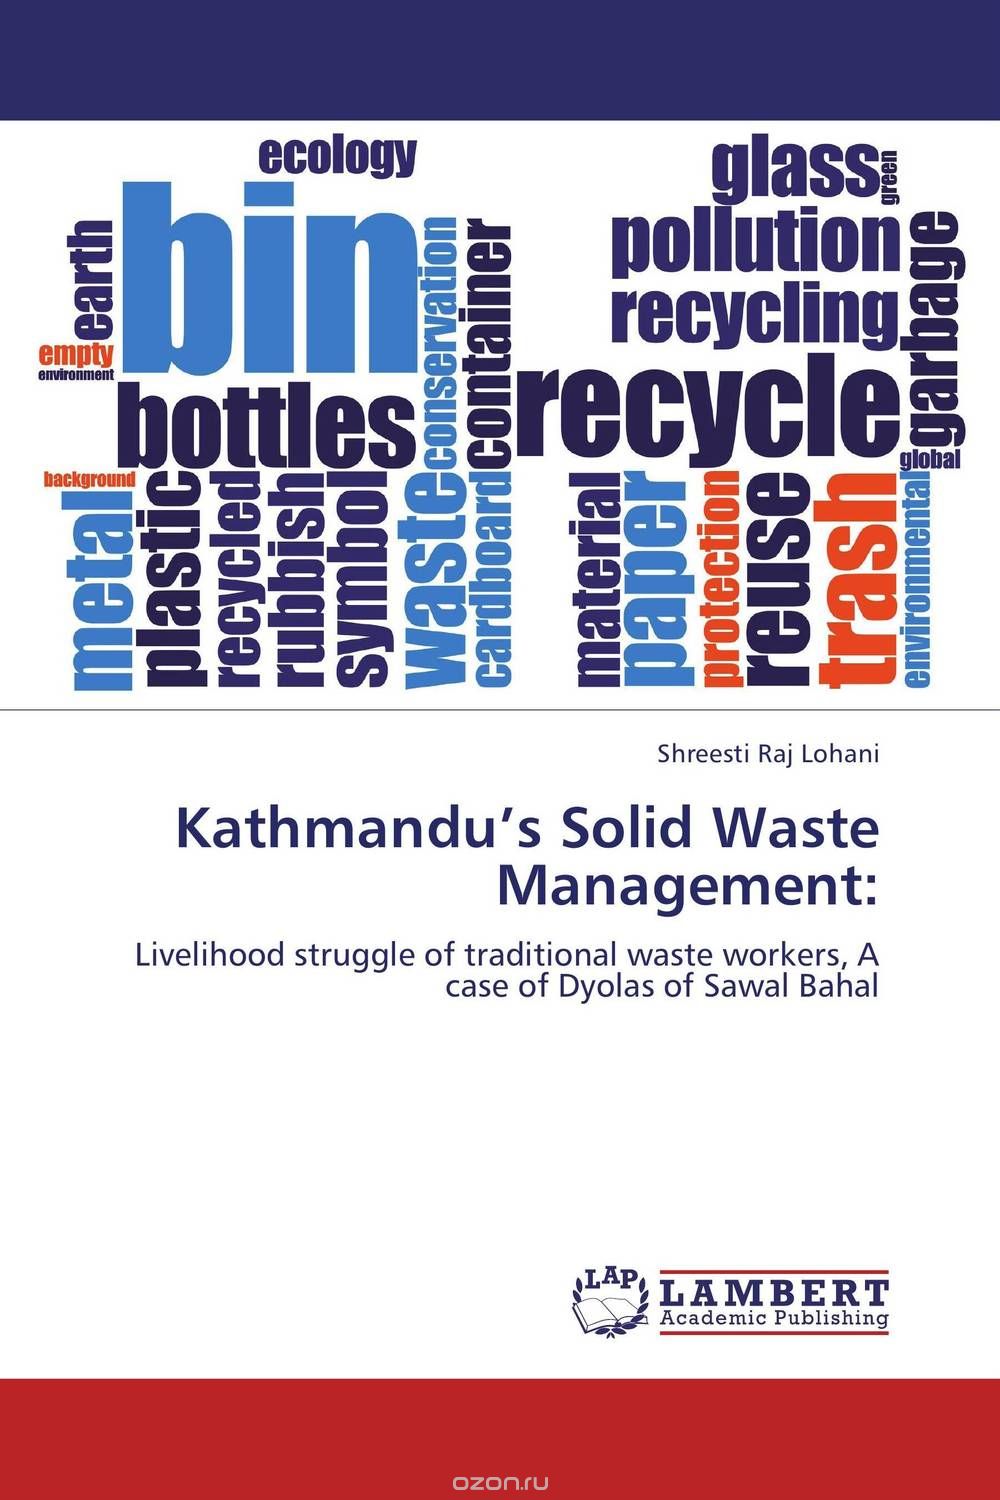 Kathmandu’s Solid Waste Management: